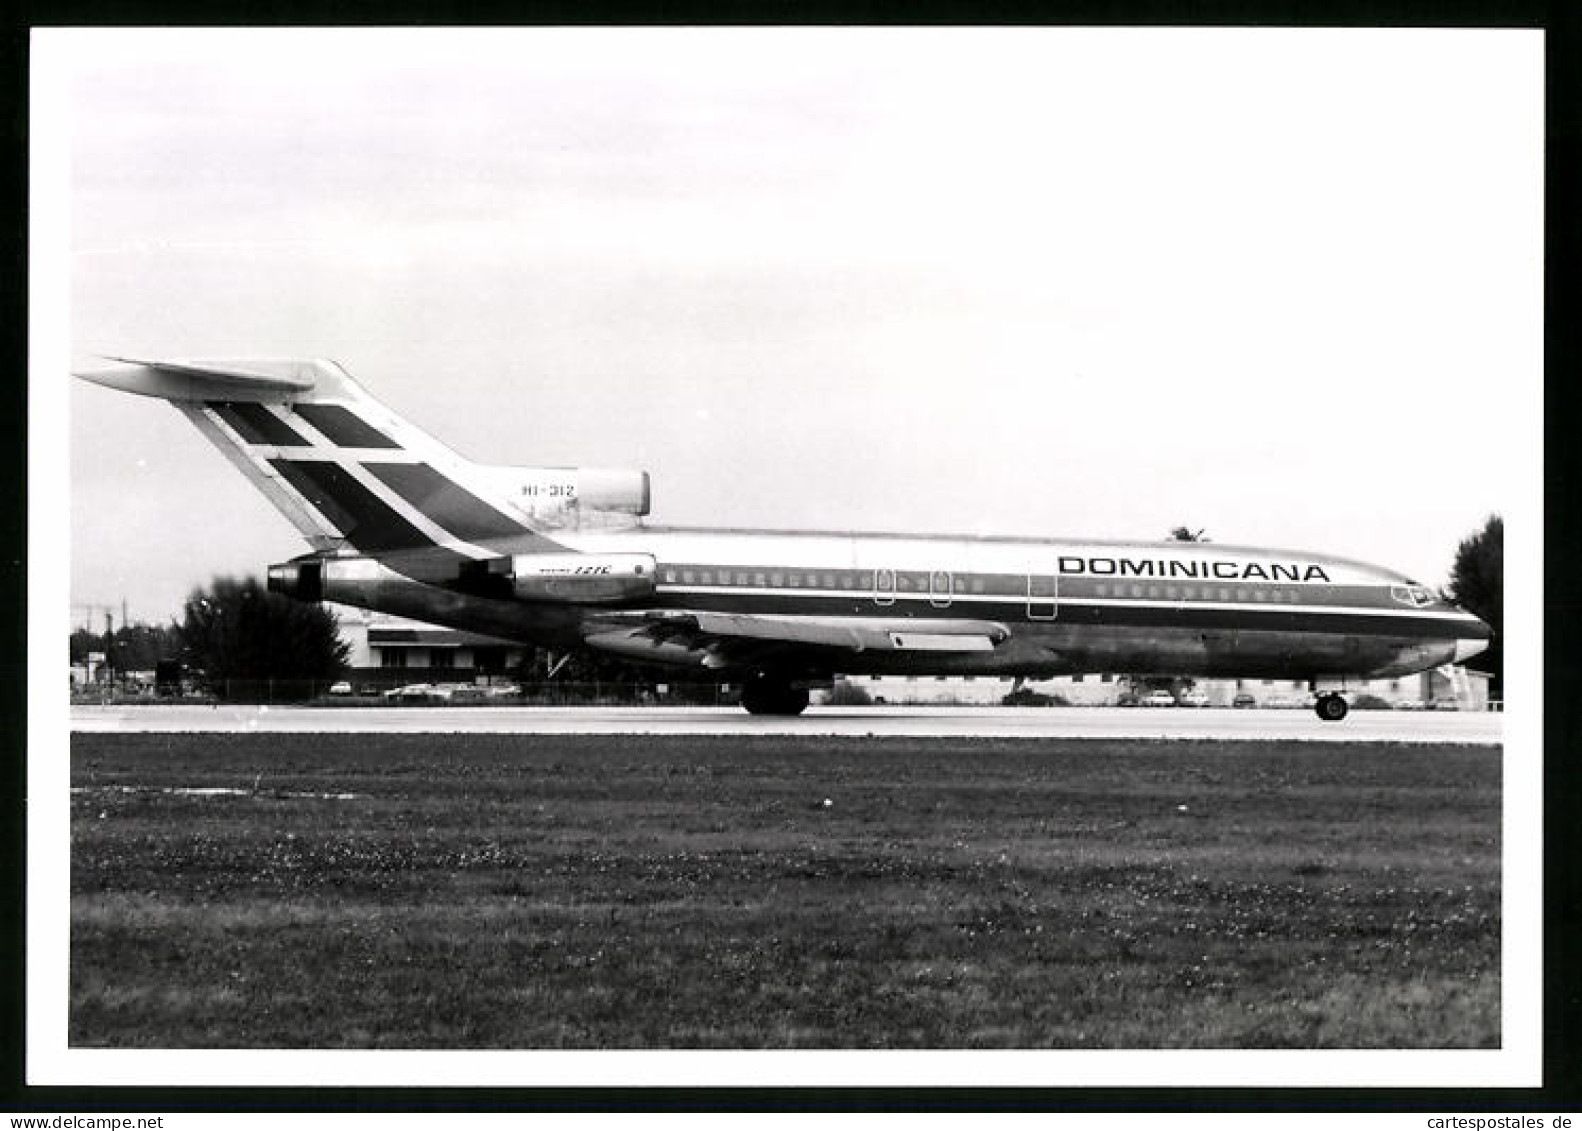 Fotografie Flugzeug Boeing 727, Passagierflugzeugder Dominicana, Kennungg HI-312  - Luftfahrt